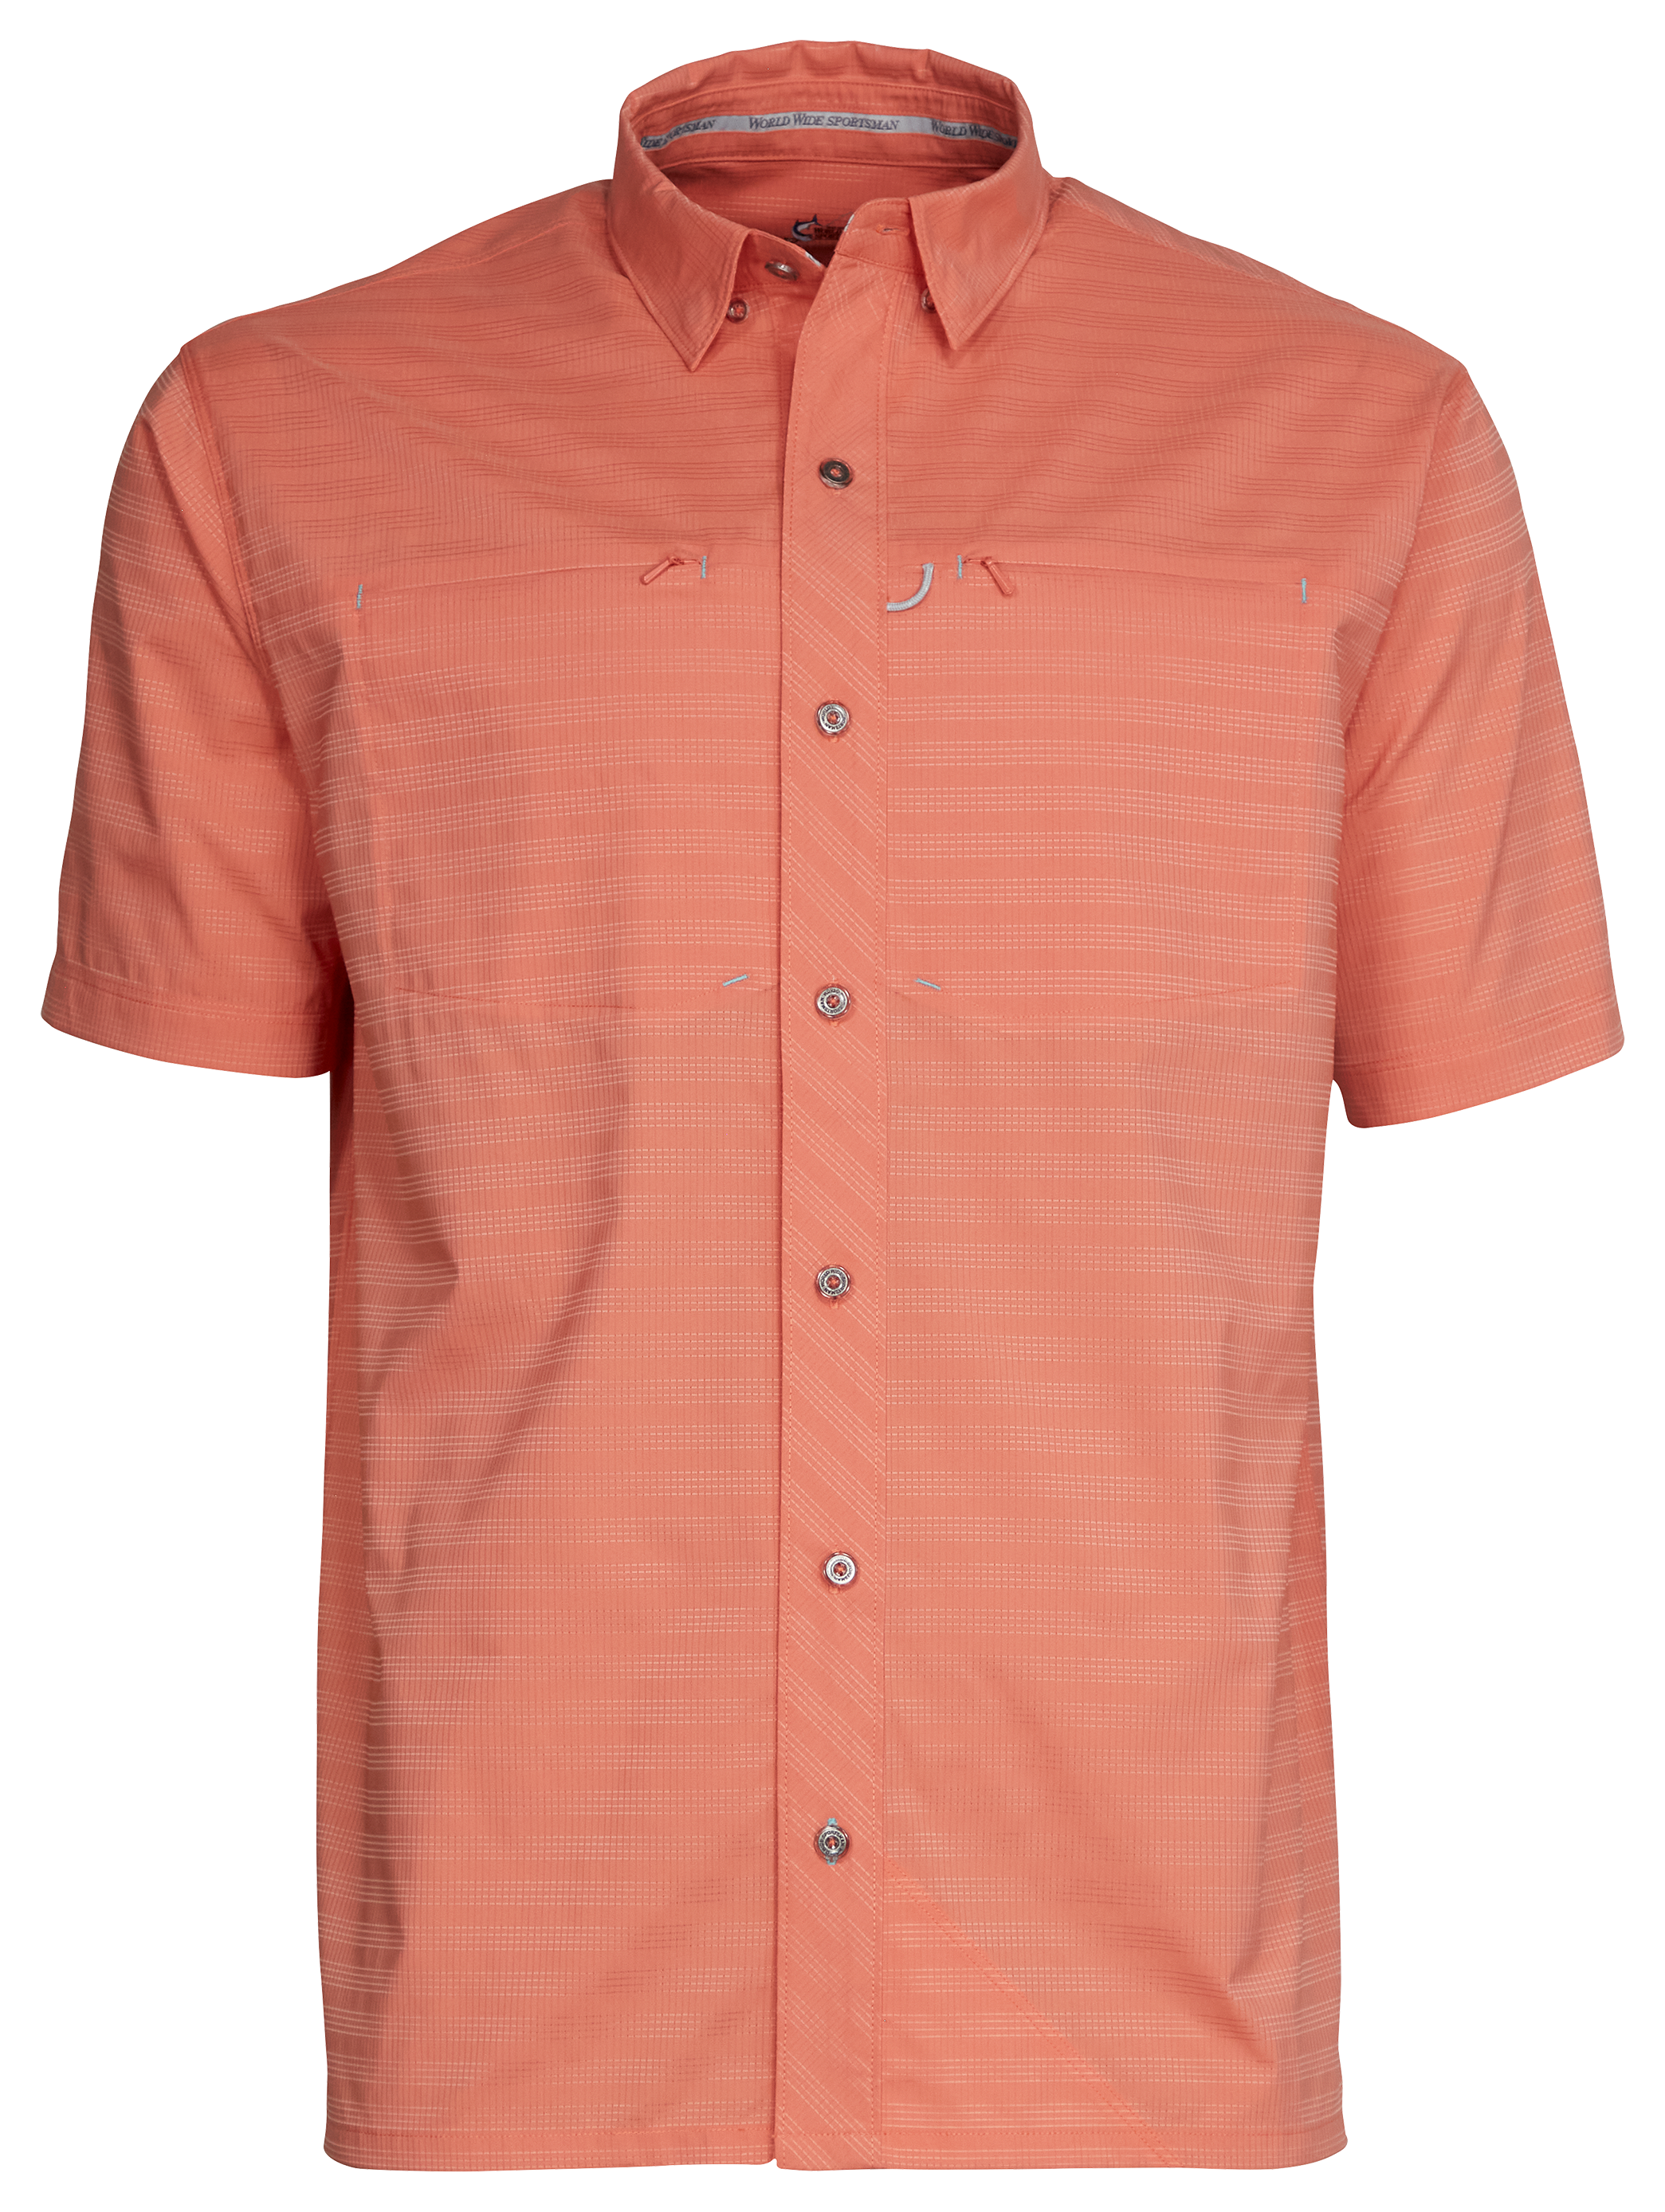 World Wide Sportsman Seacrest 2-Pocket Short-Sleeve Button-Down Shirt for Men - Crabapple - 2XL